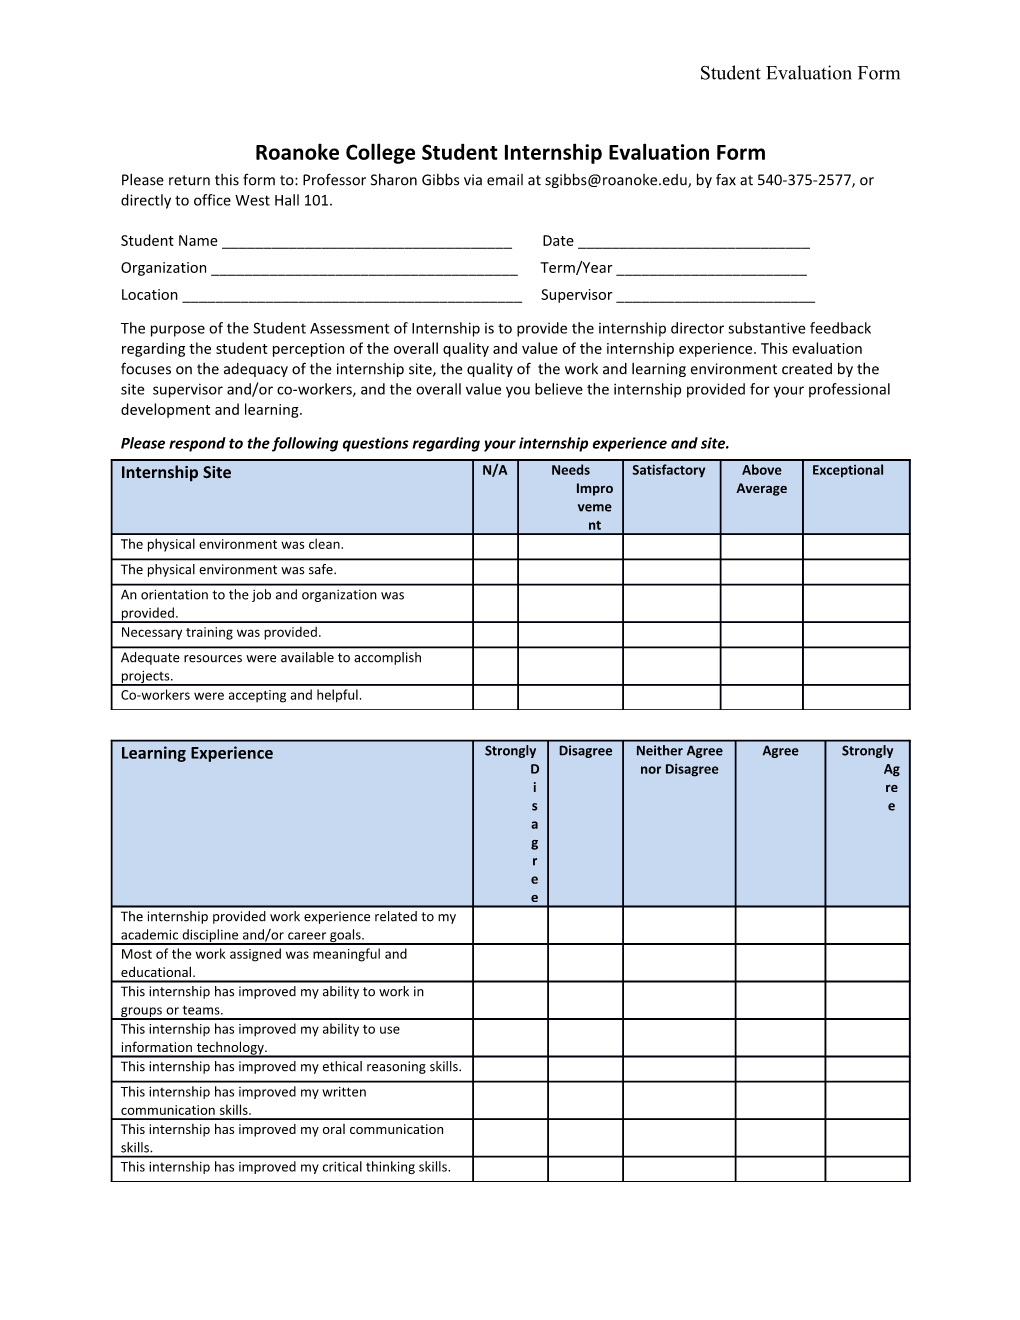 Roanoke College Student Internship Evaluation Form